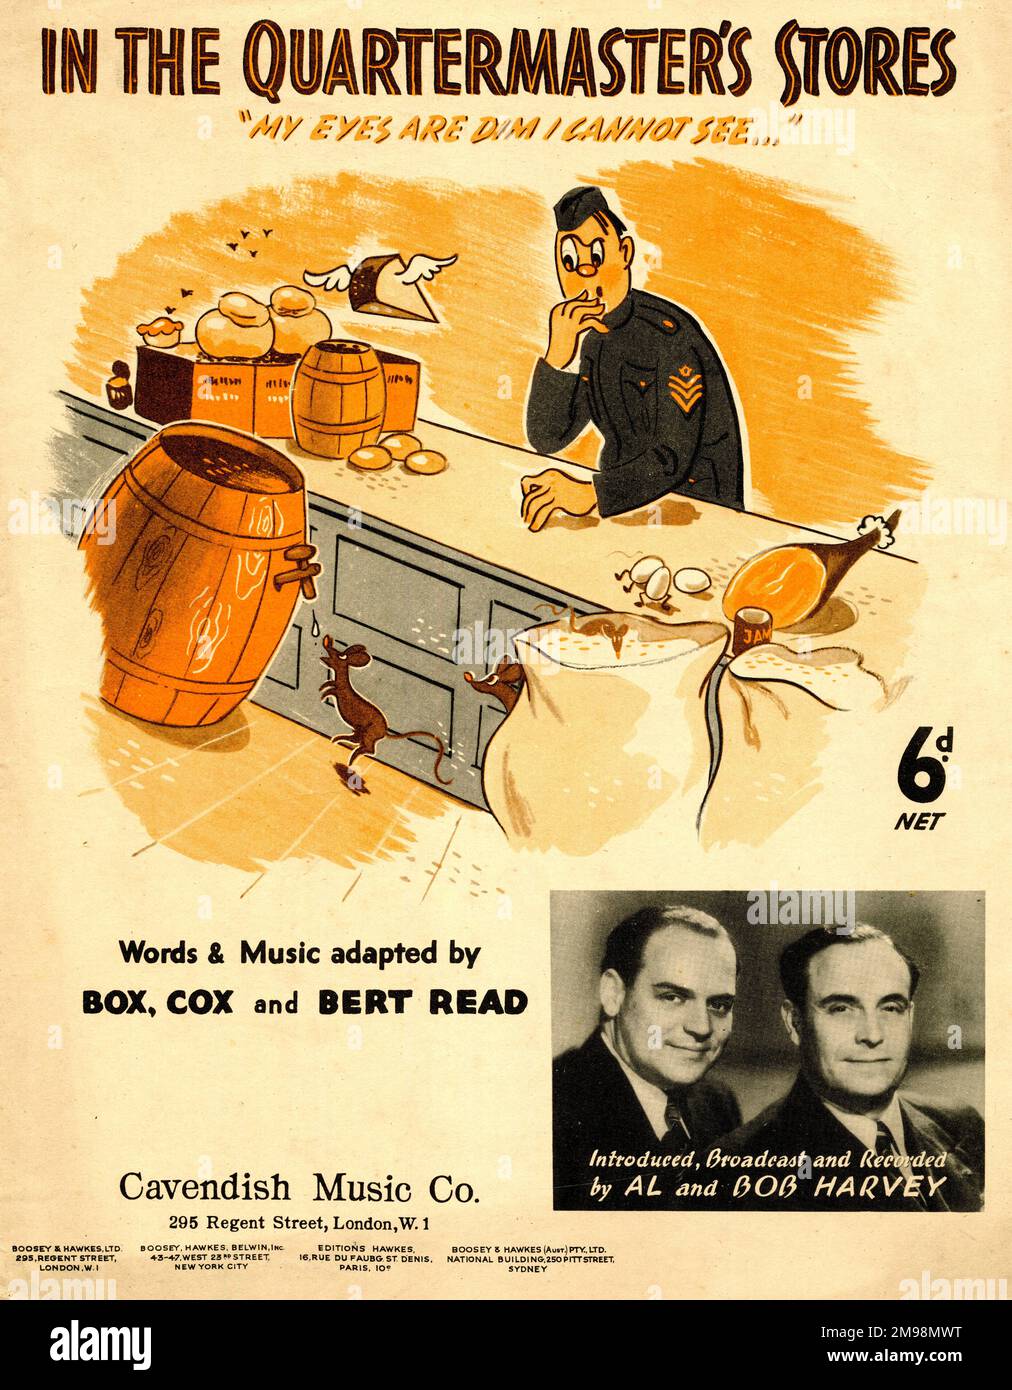 Copertina musicale, nei Quartermaster's Stores (My Eyes are Dim i cannot SEE), parole e musica adattati da Box, Cox e Bert Read. Foto Stock